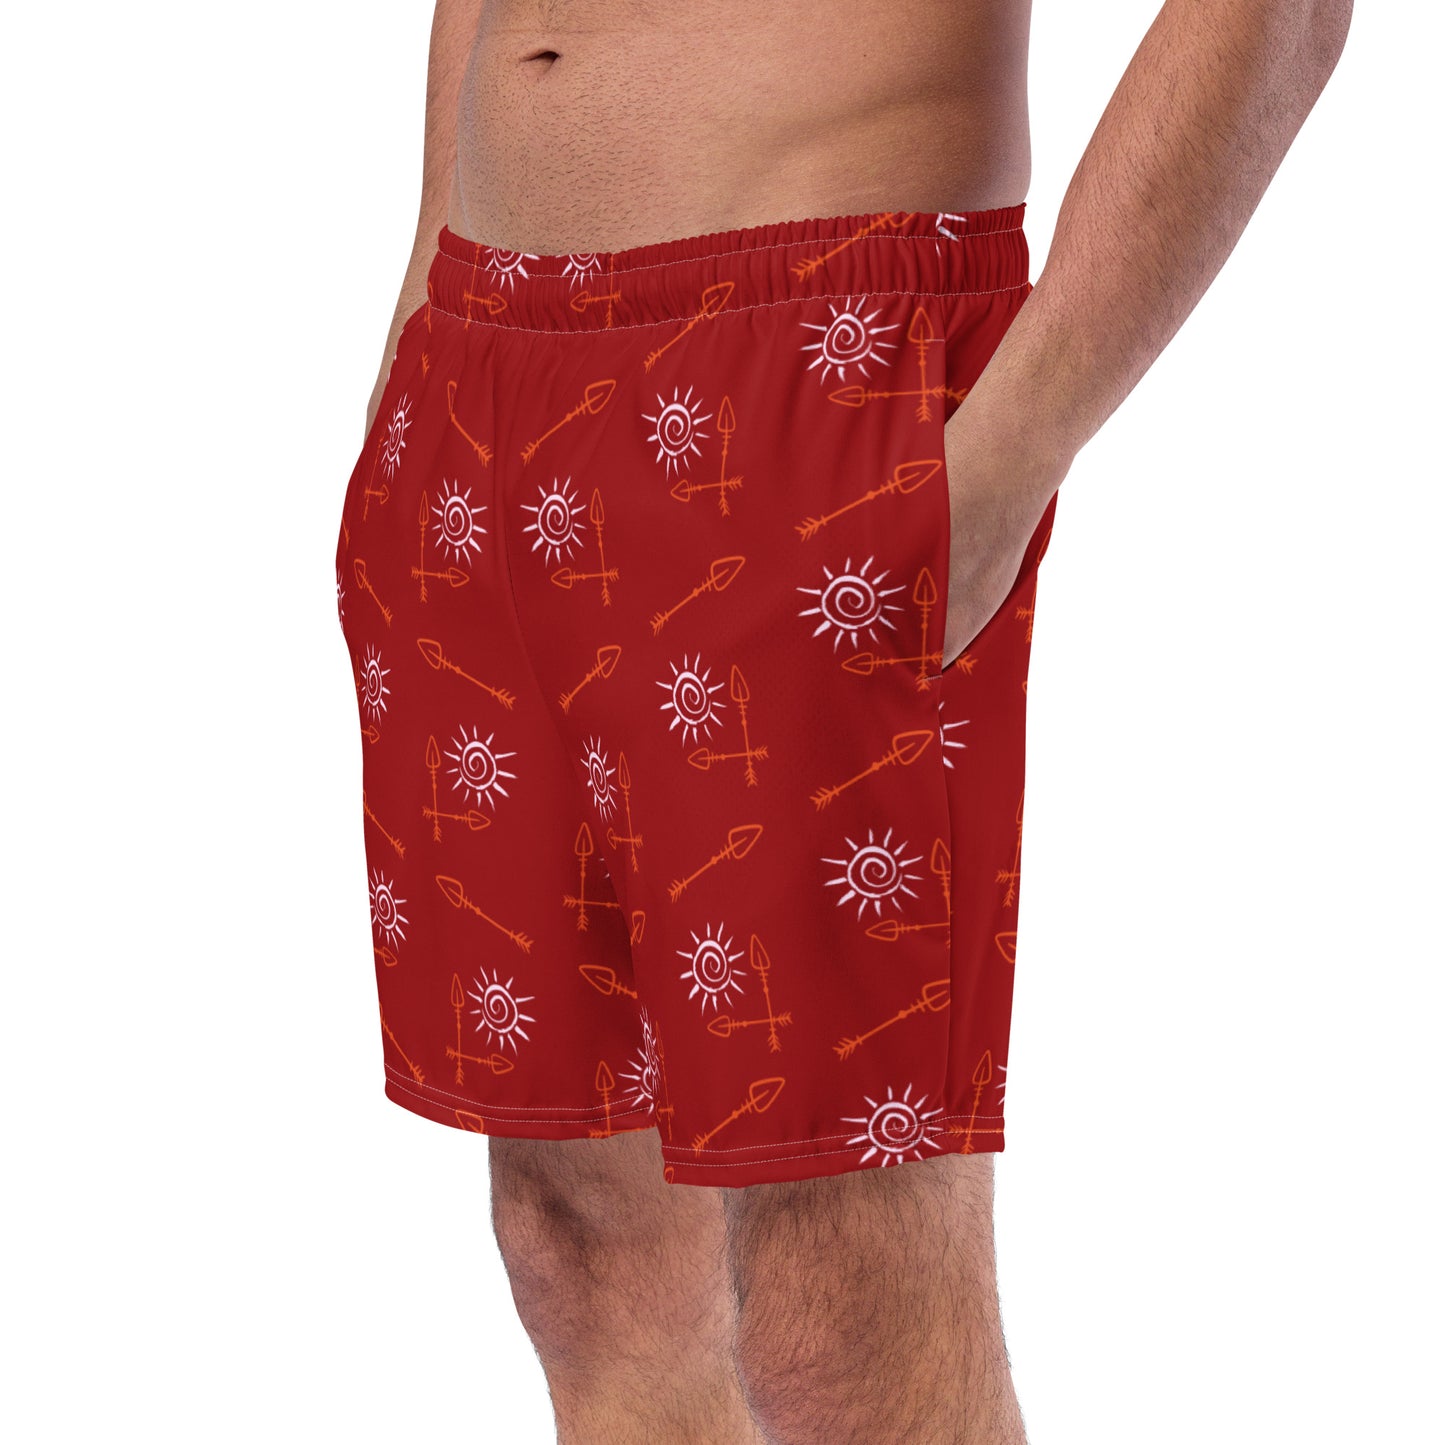 Akai Spade Recycled Men's swim trunks